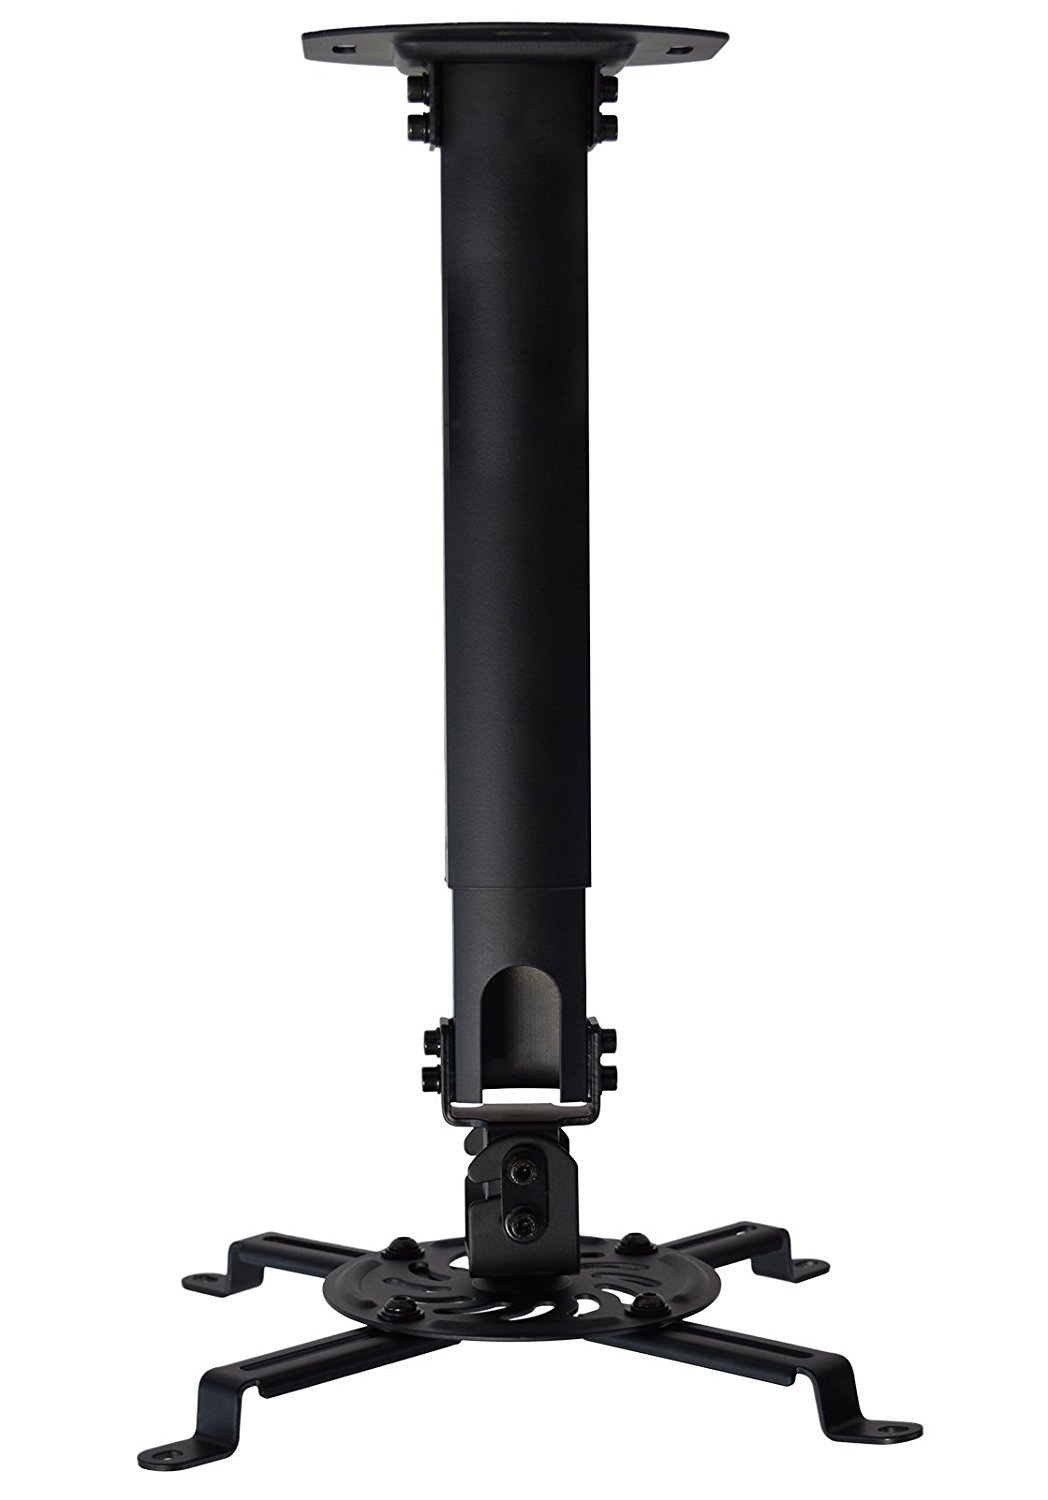 VIVO Universal Projector Ceiling Mount - Adjustable Height